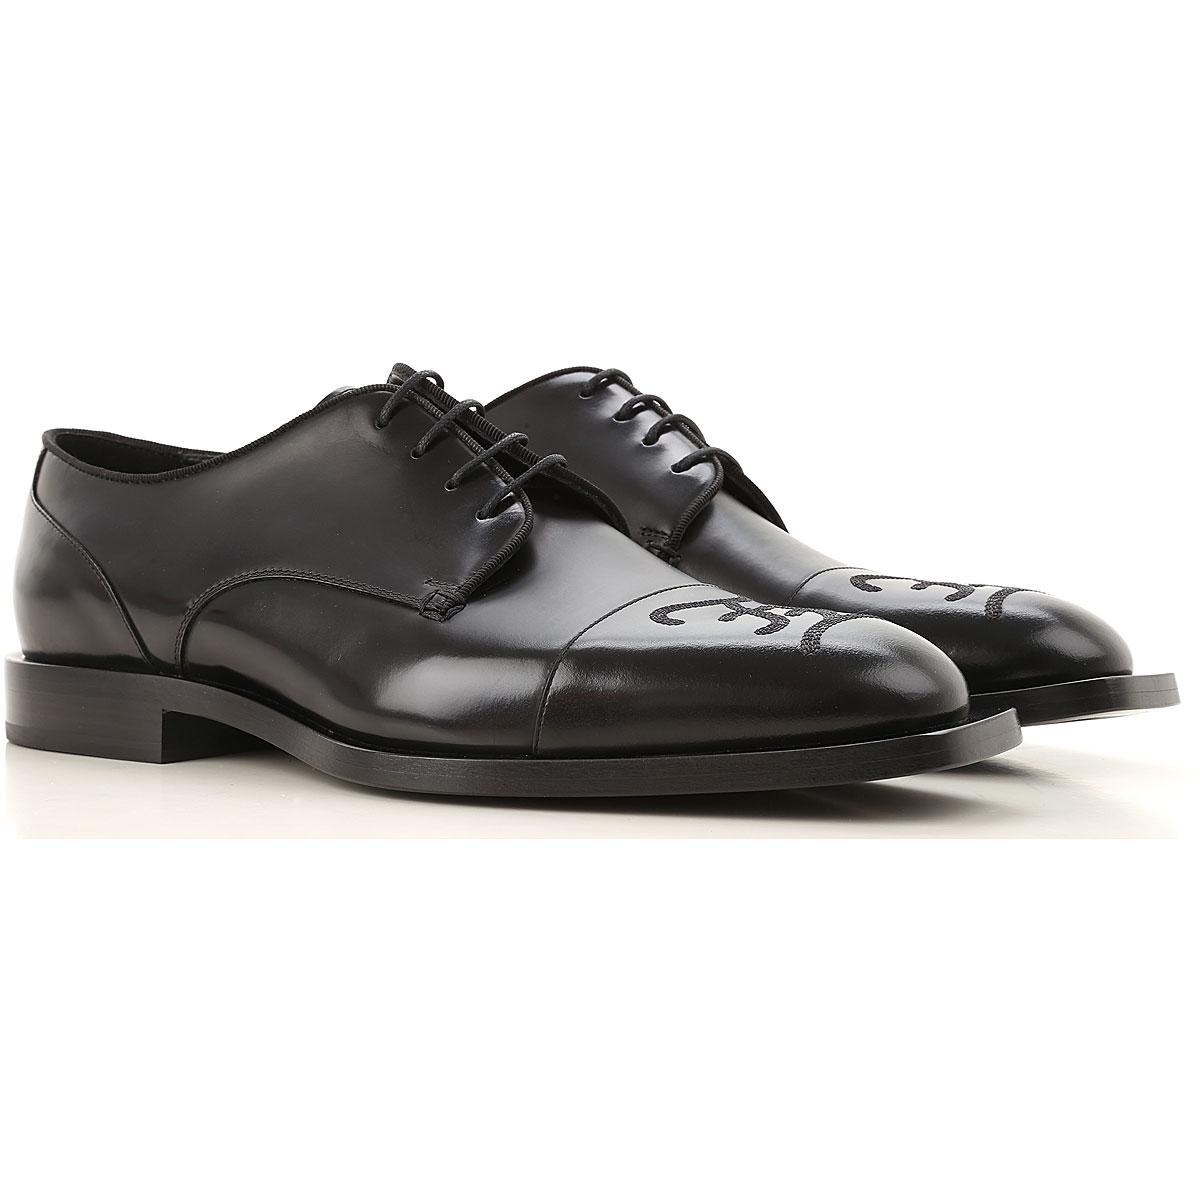 Fendi Lace Up Shoes For Men Oxfords in Black for Men - Lyst